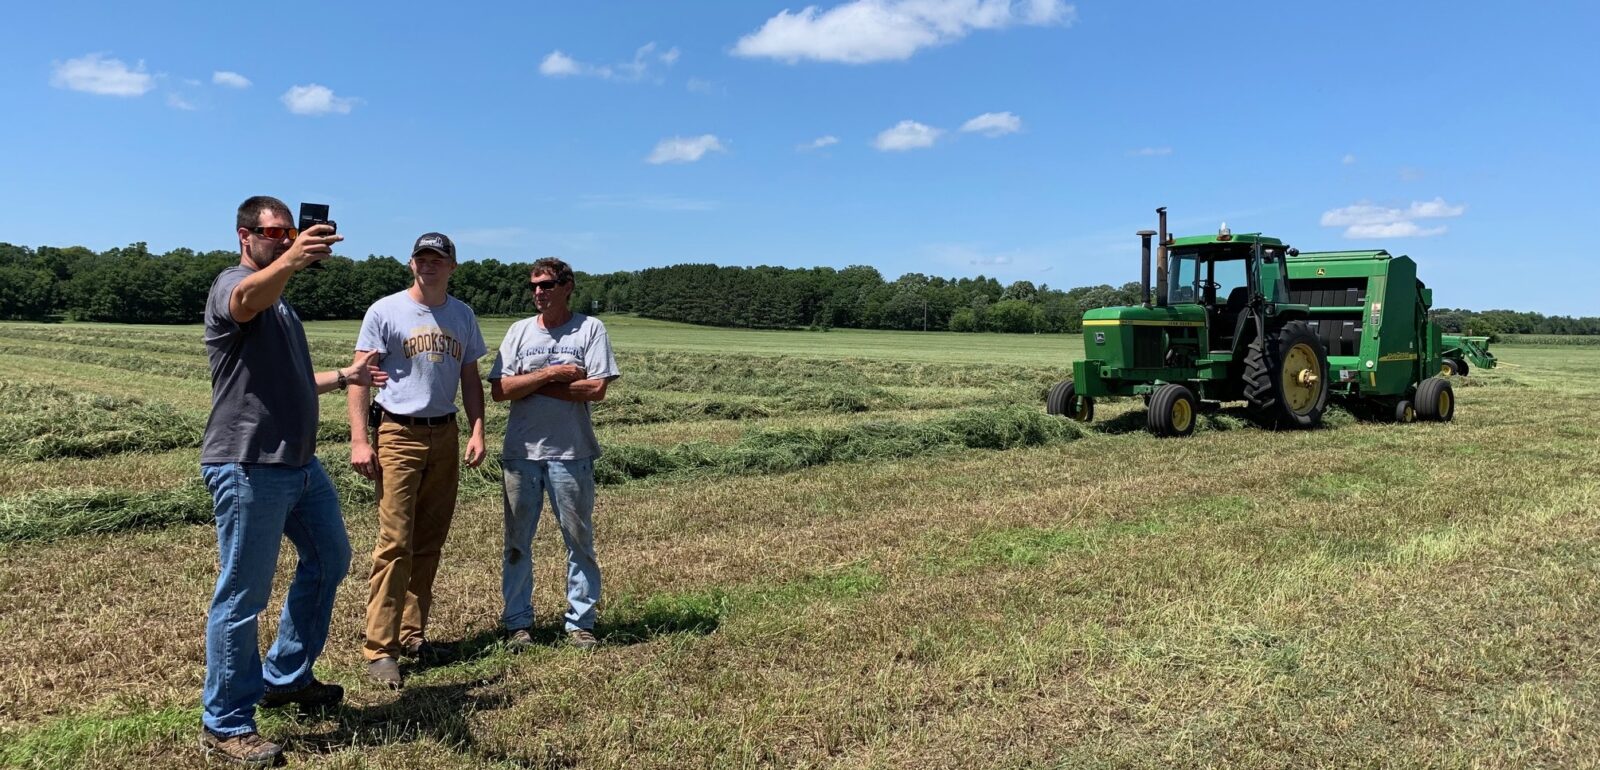 baling hay with millennial farmer